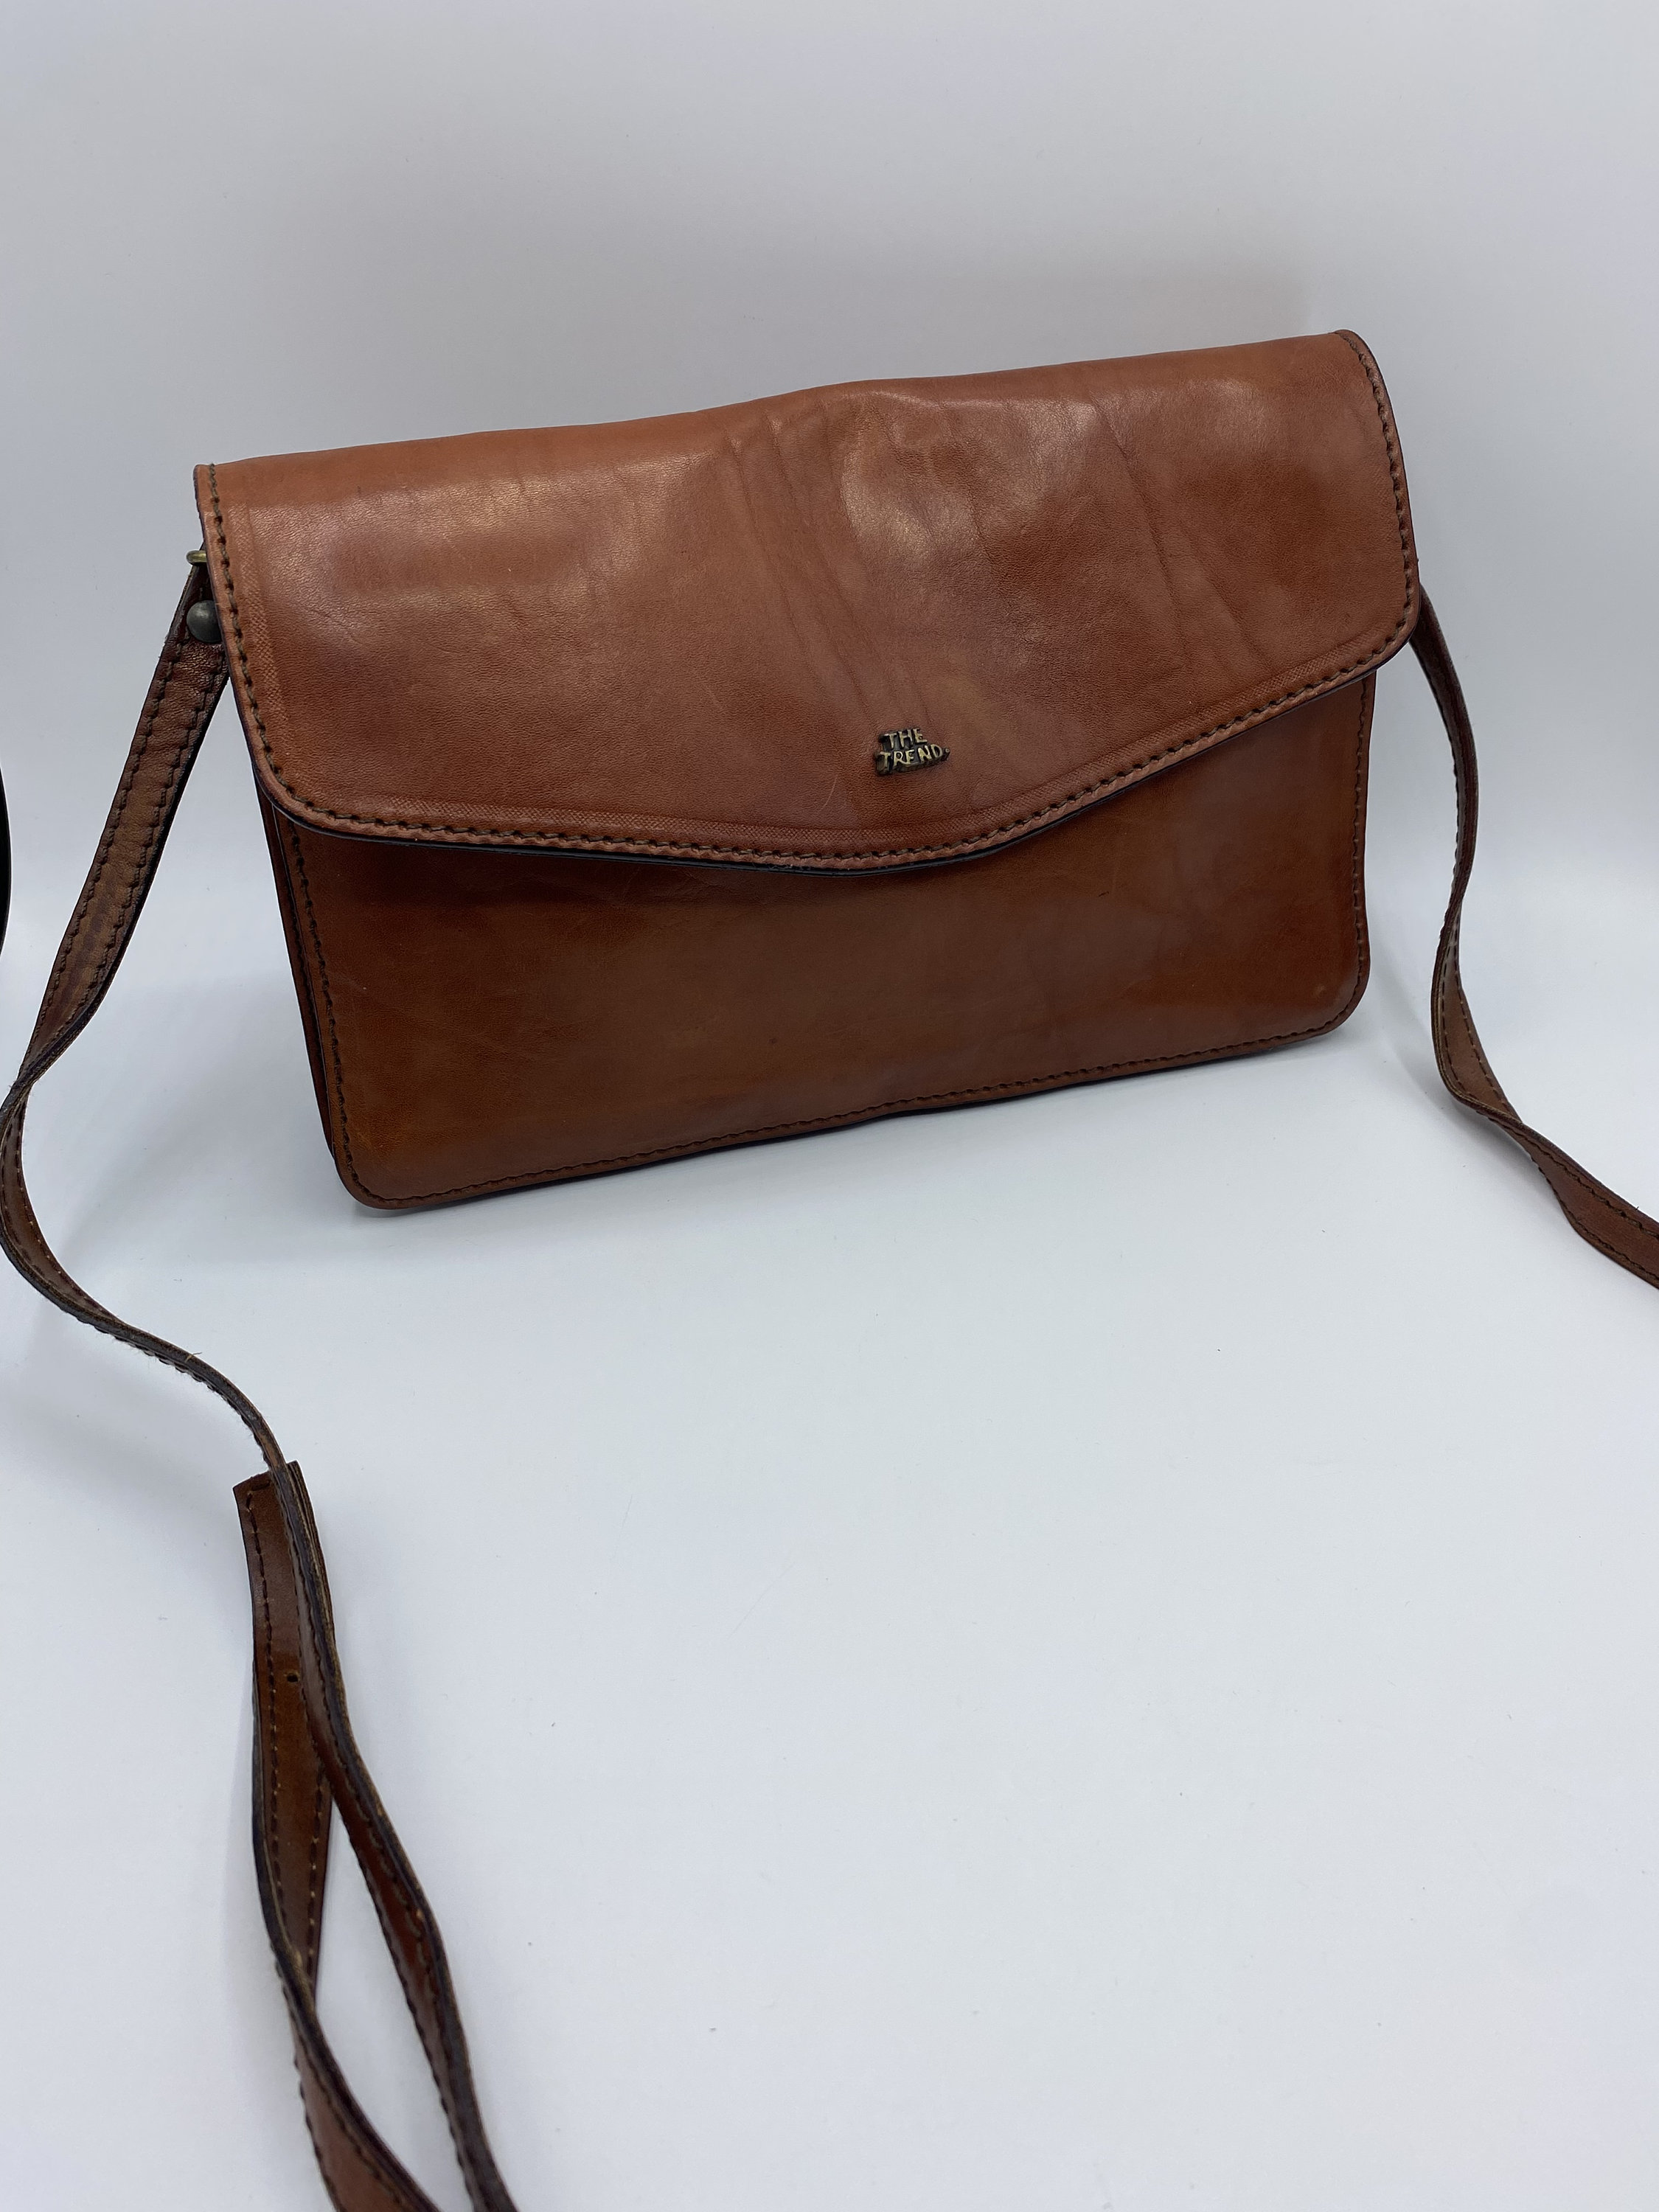 Alma Tonutti NOWT  Vintage inspired handbags, Leopard print handbags, Pink  shoulder bags